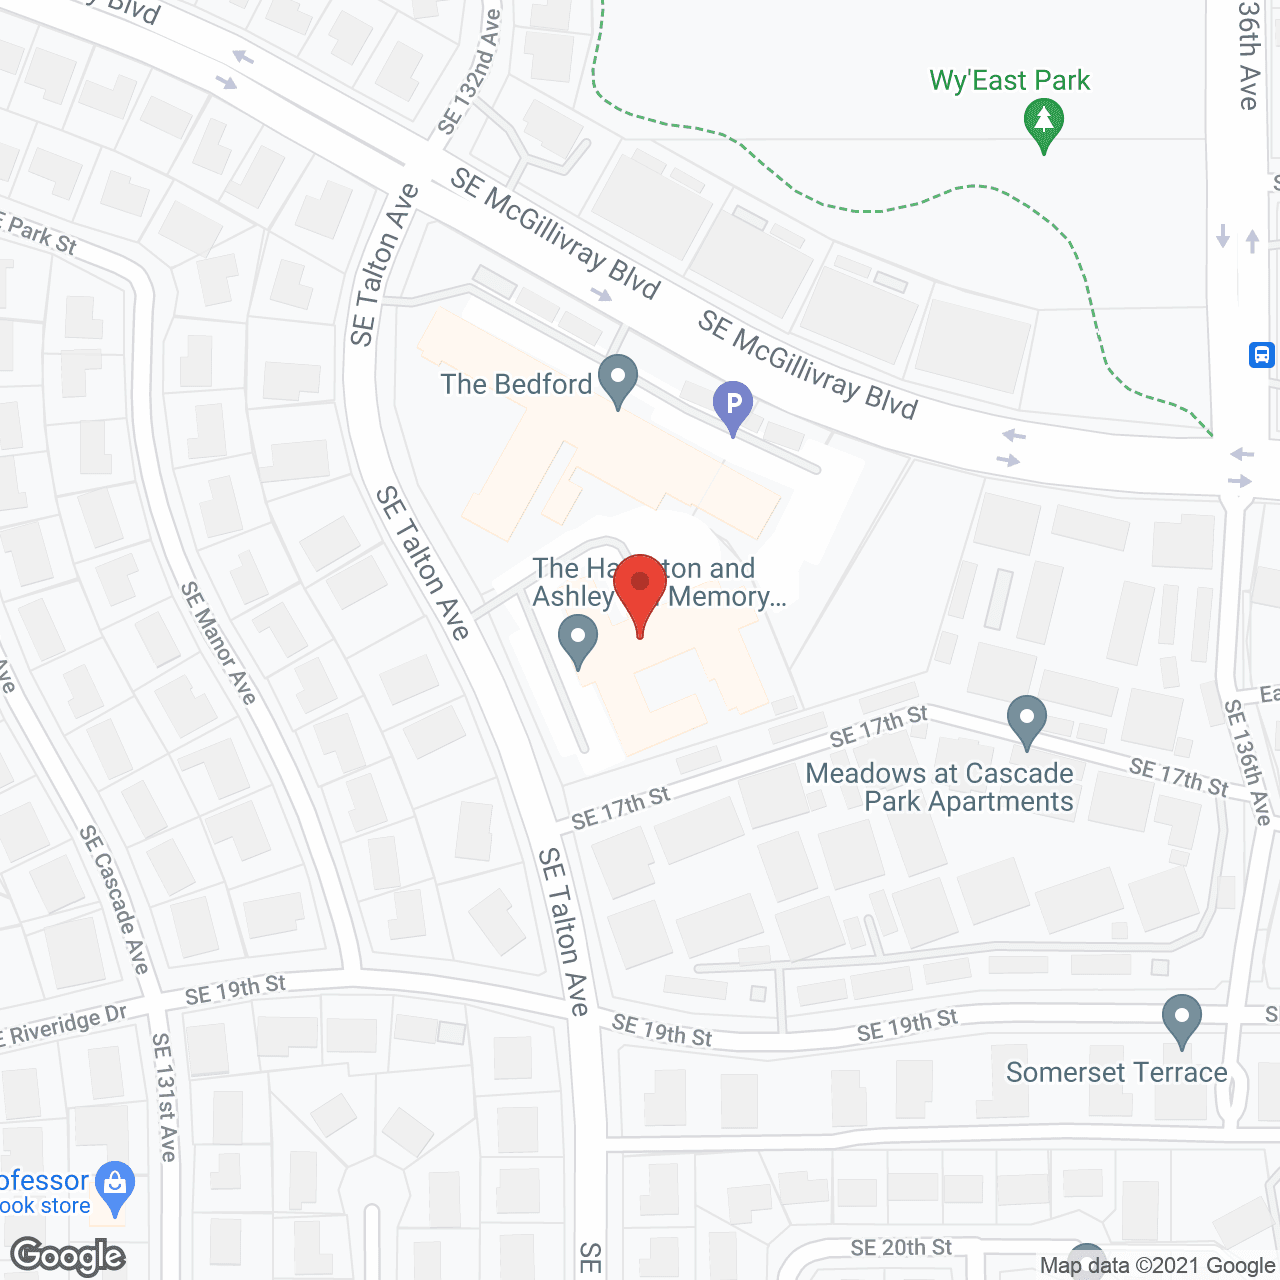 The Hampton and Ashley Inn in google map